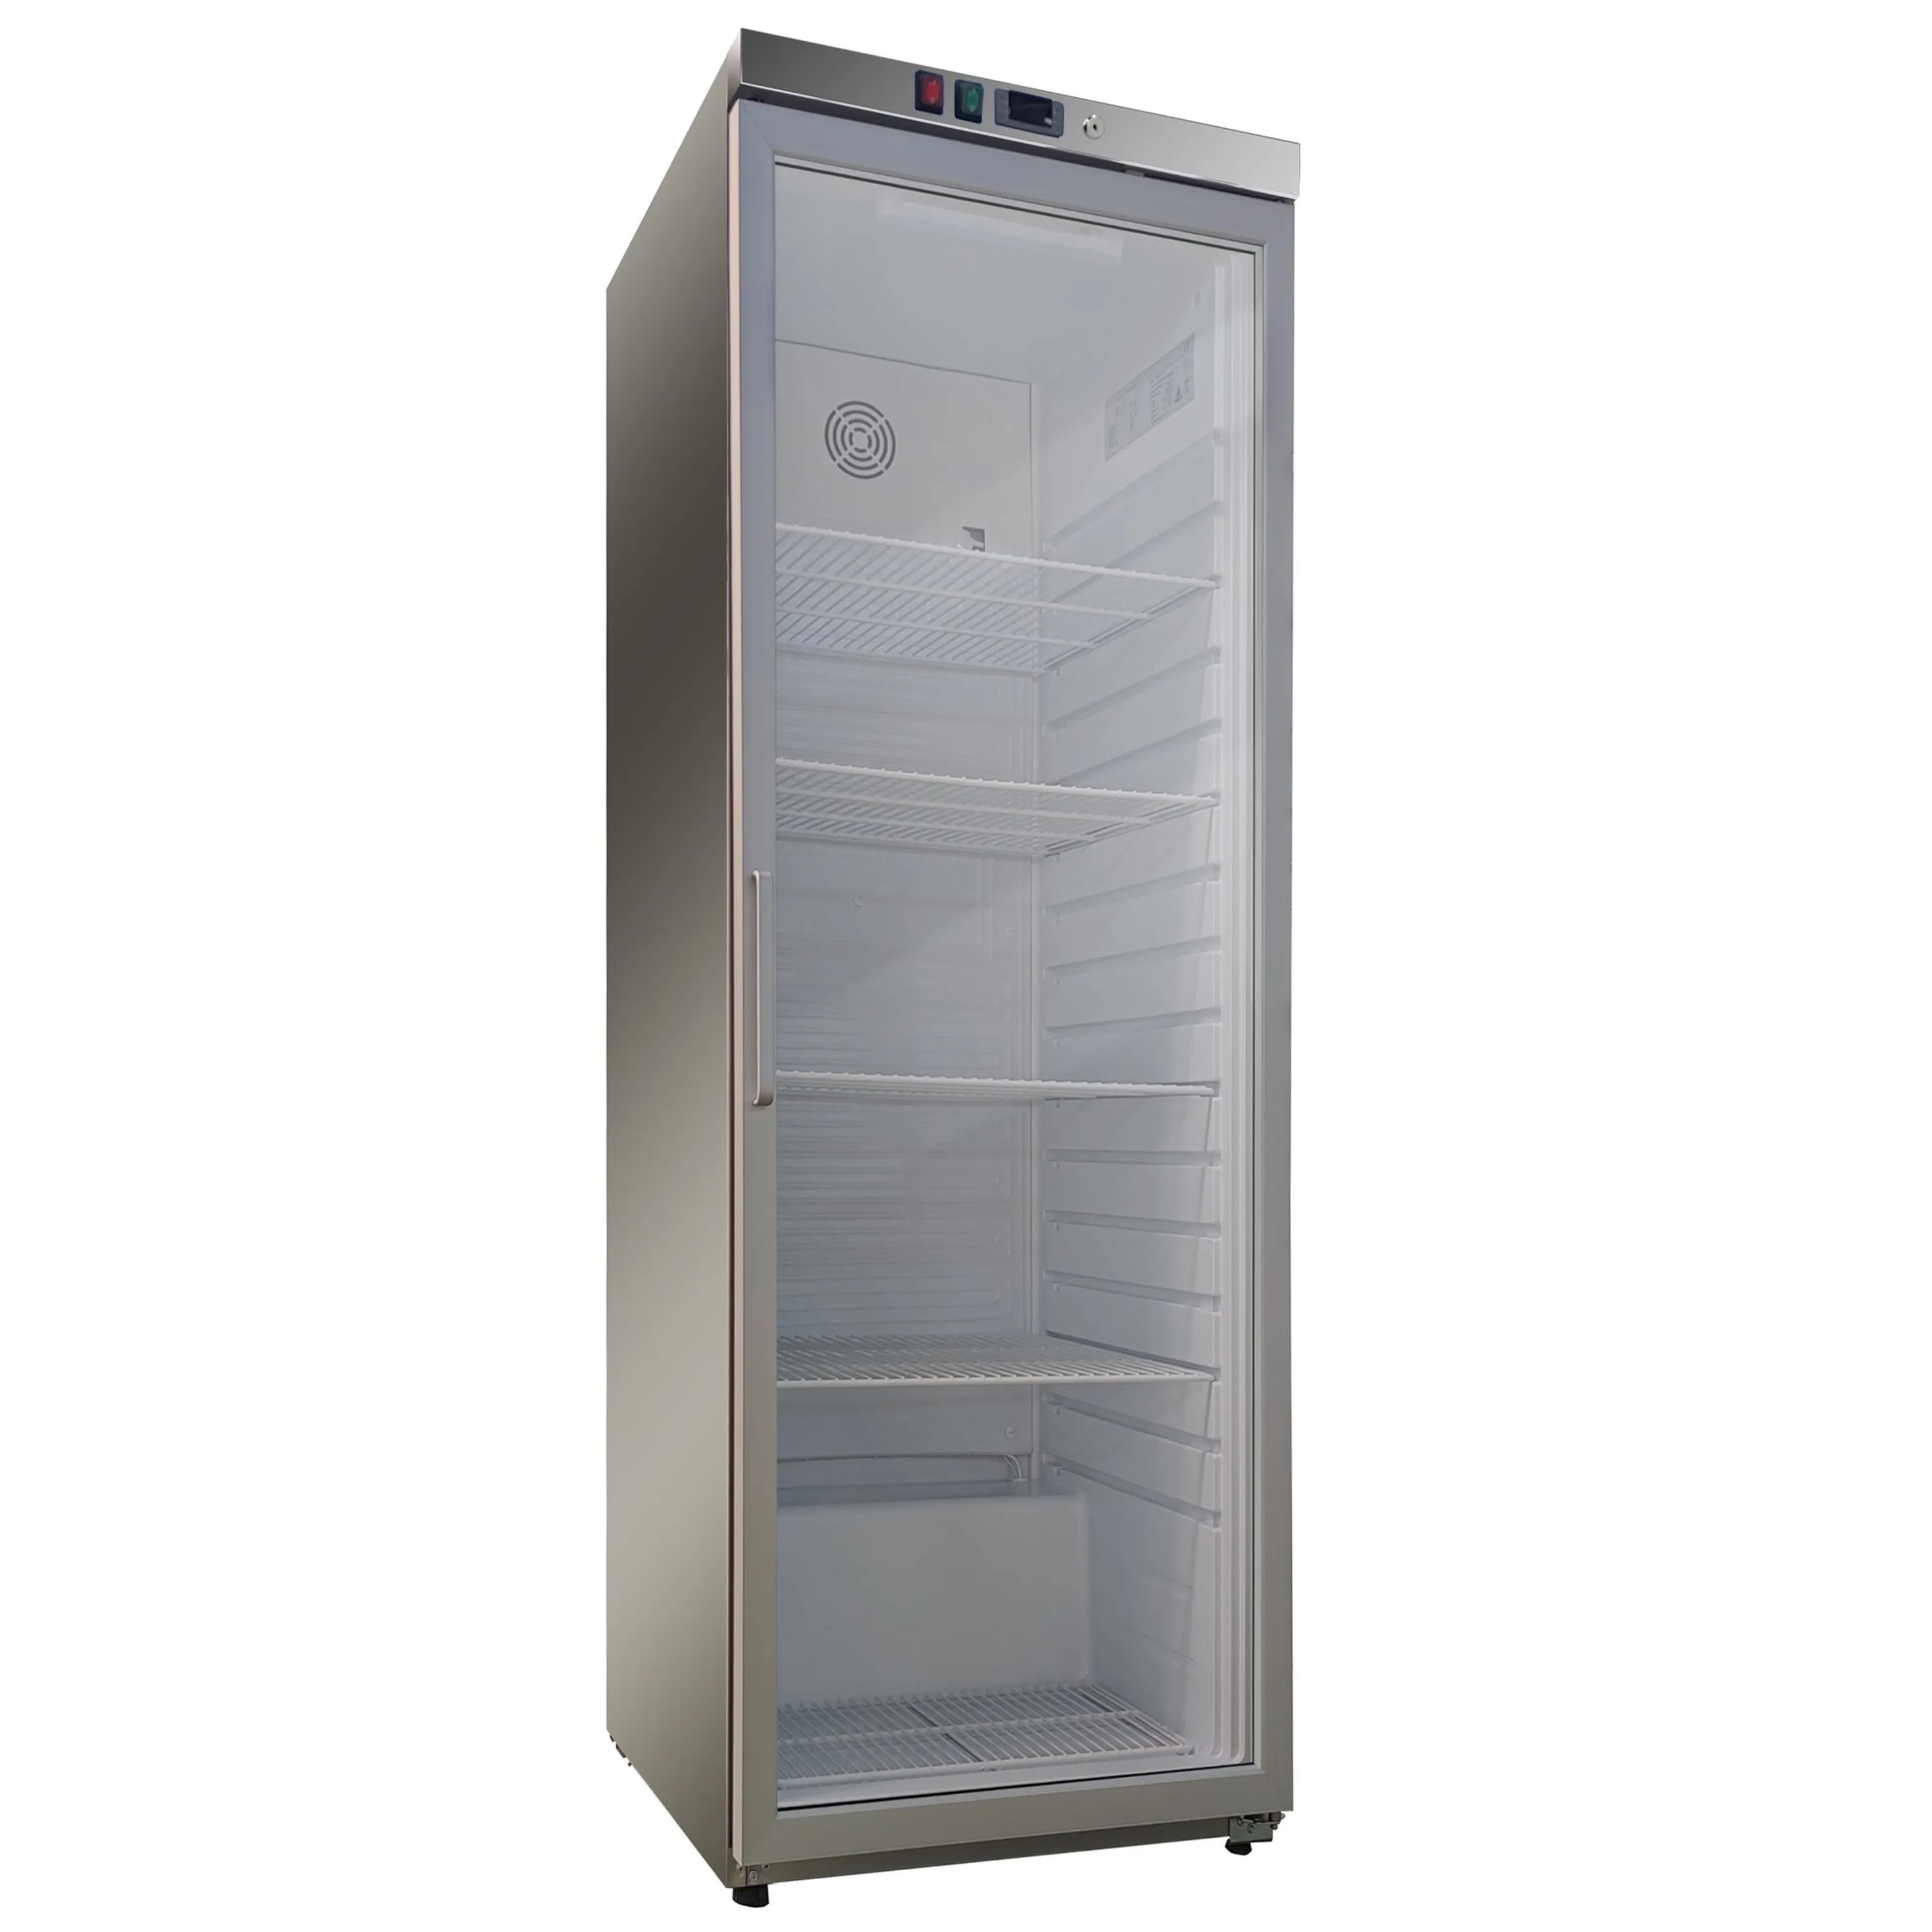 Blizzard HSG40 Single Glass Door Stainless Steel Refrigerator